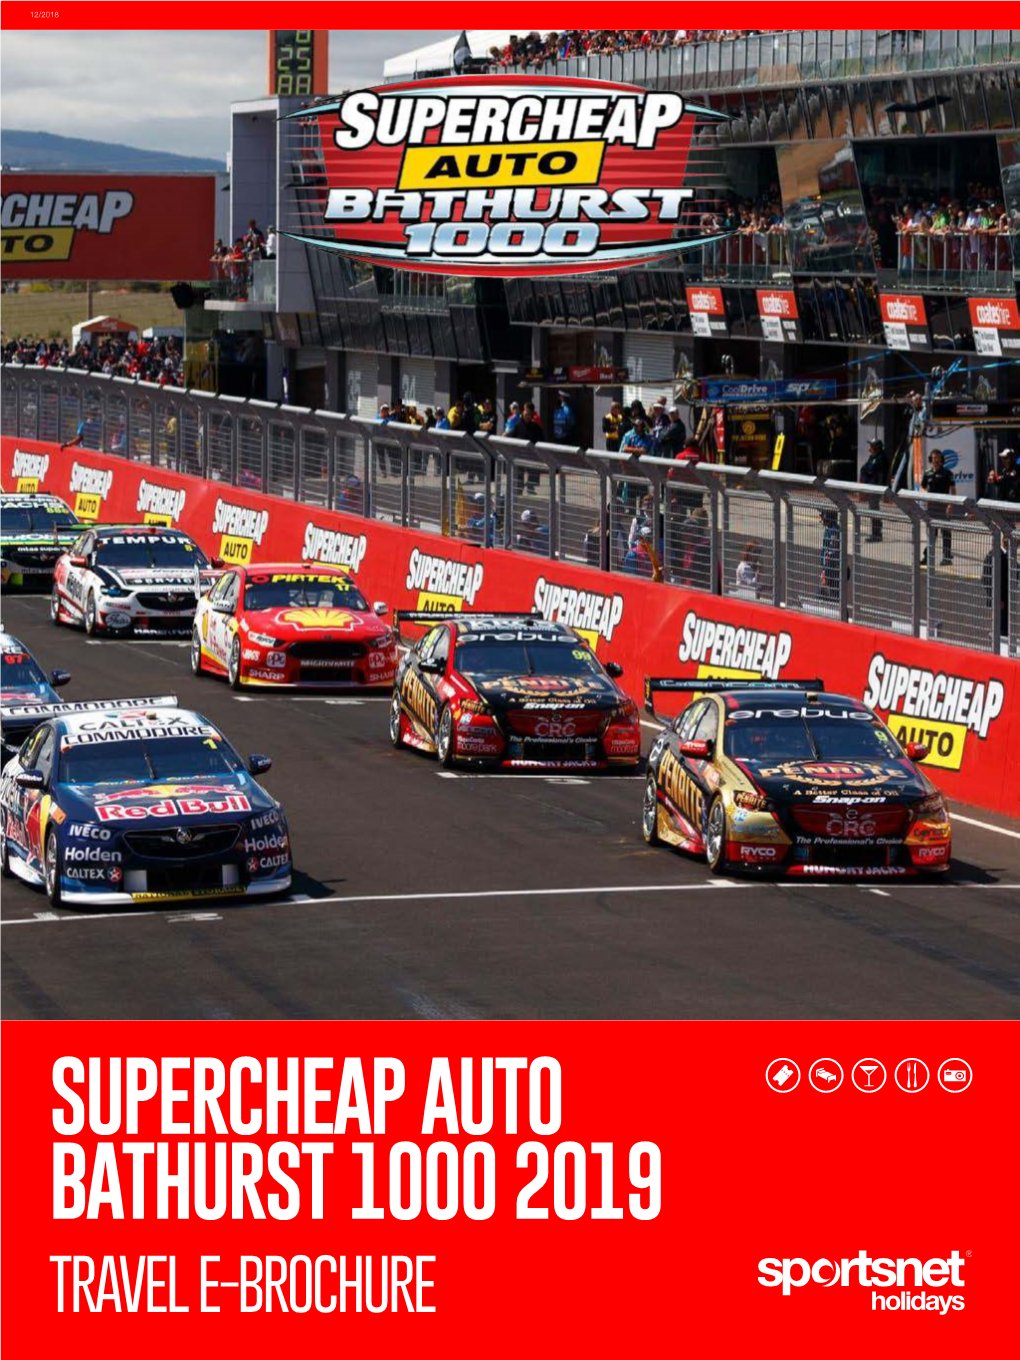 Supercheap Auto Bathurst 1000 2019 Travel E-Brochure